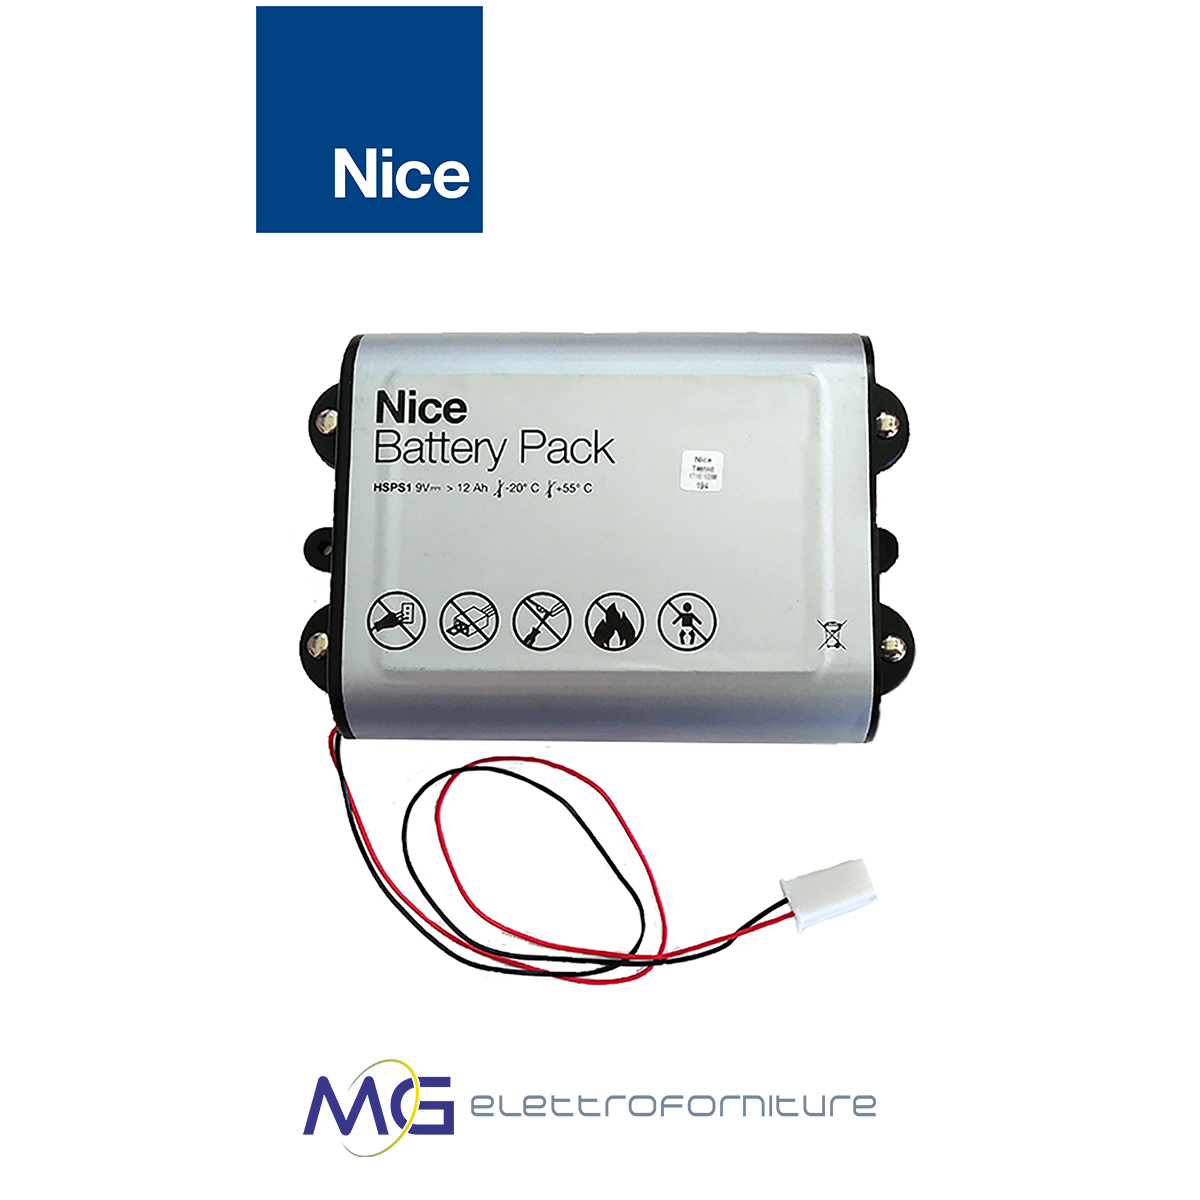 NICE HSPS1 pacco batteria 9 V 12 Ah per sirena da esterno e